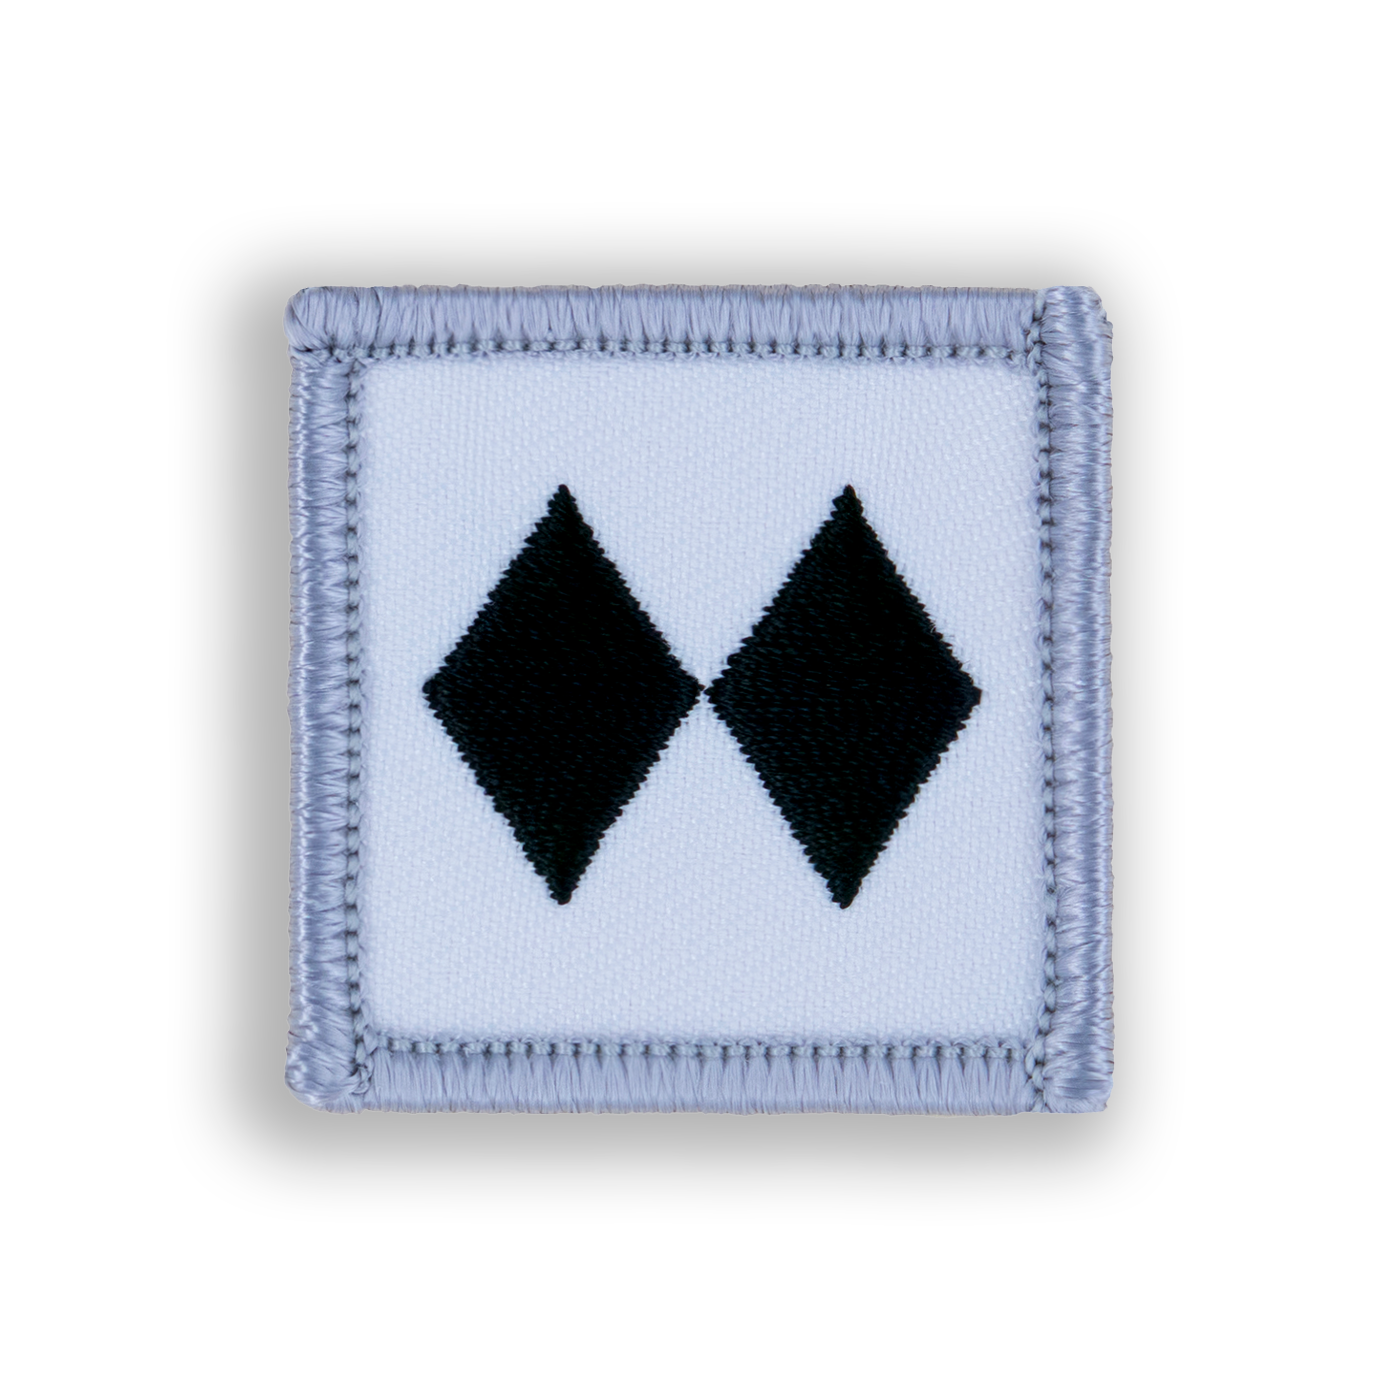 Double Black Ski Patch | Demerit Wear - Fake Merit Badges